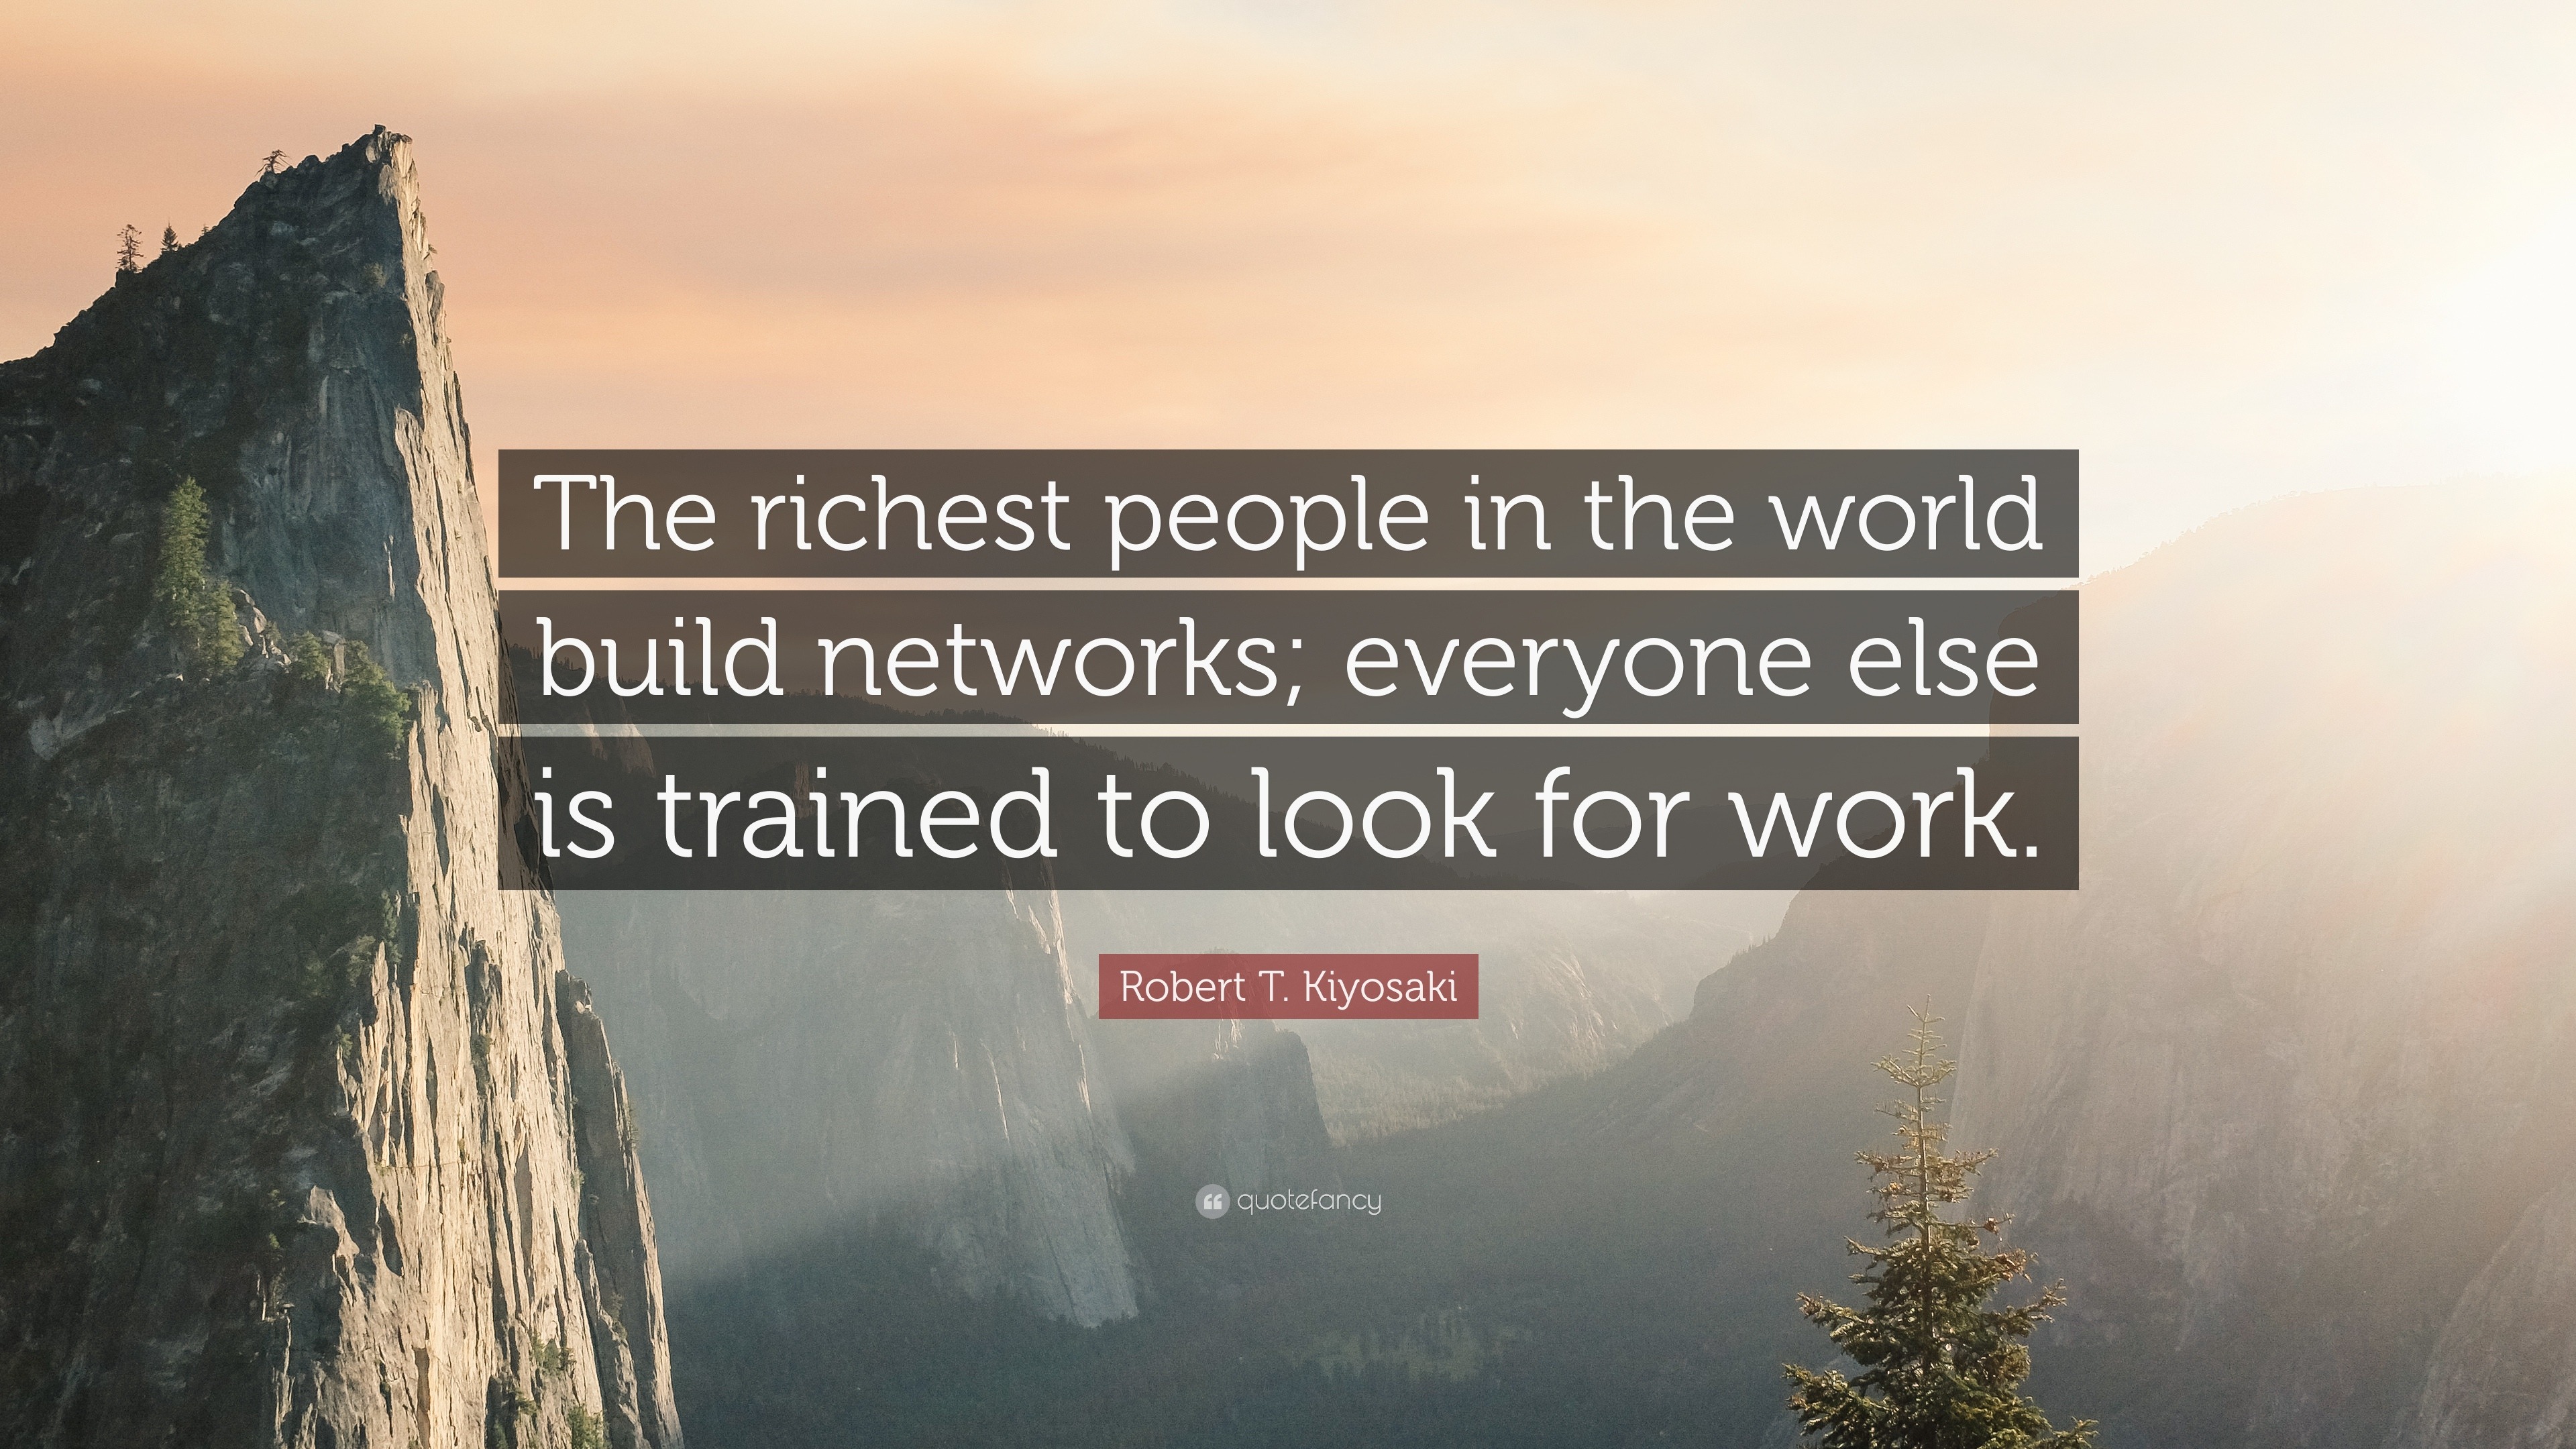 people network world